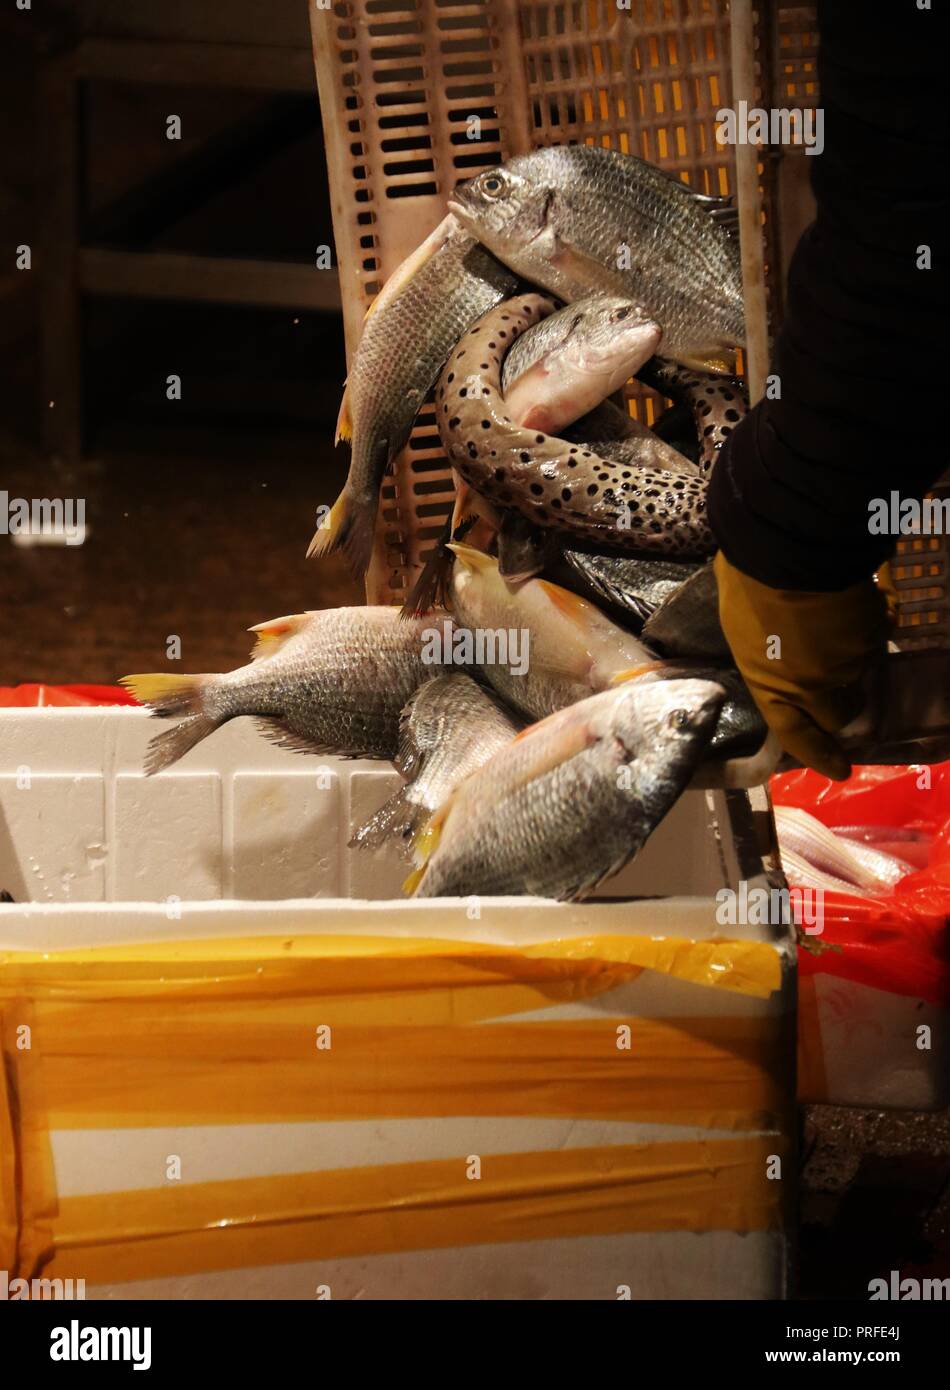 Fish night market in China Stock Photo